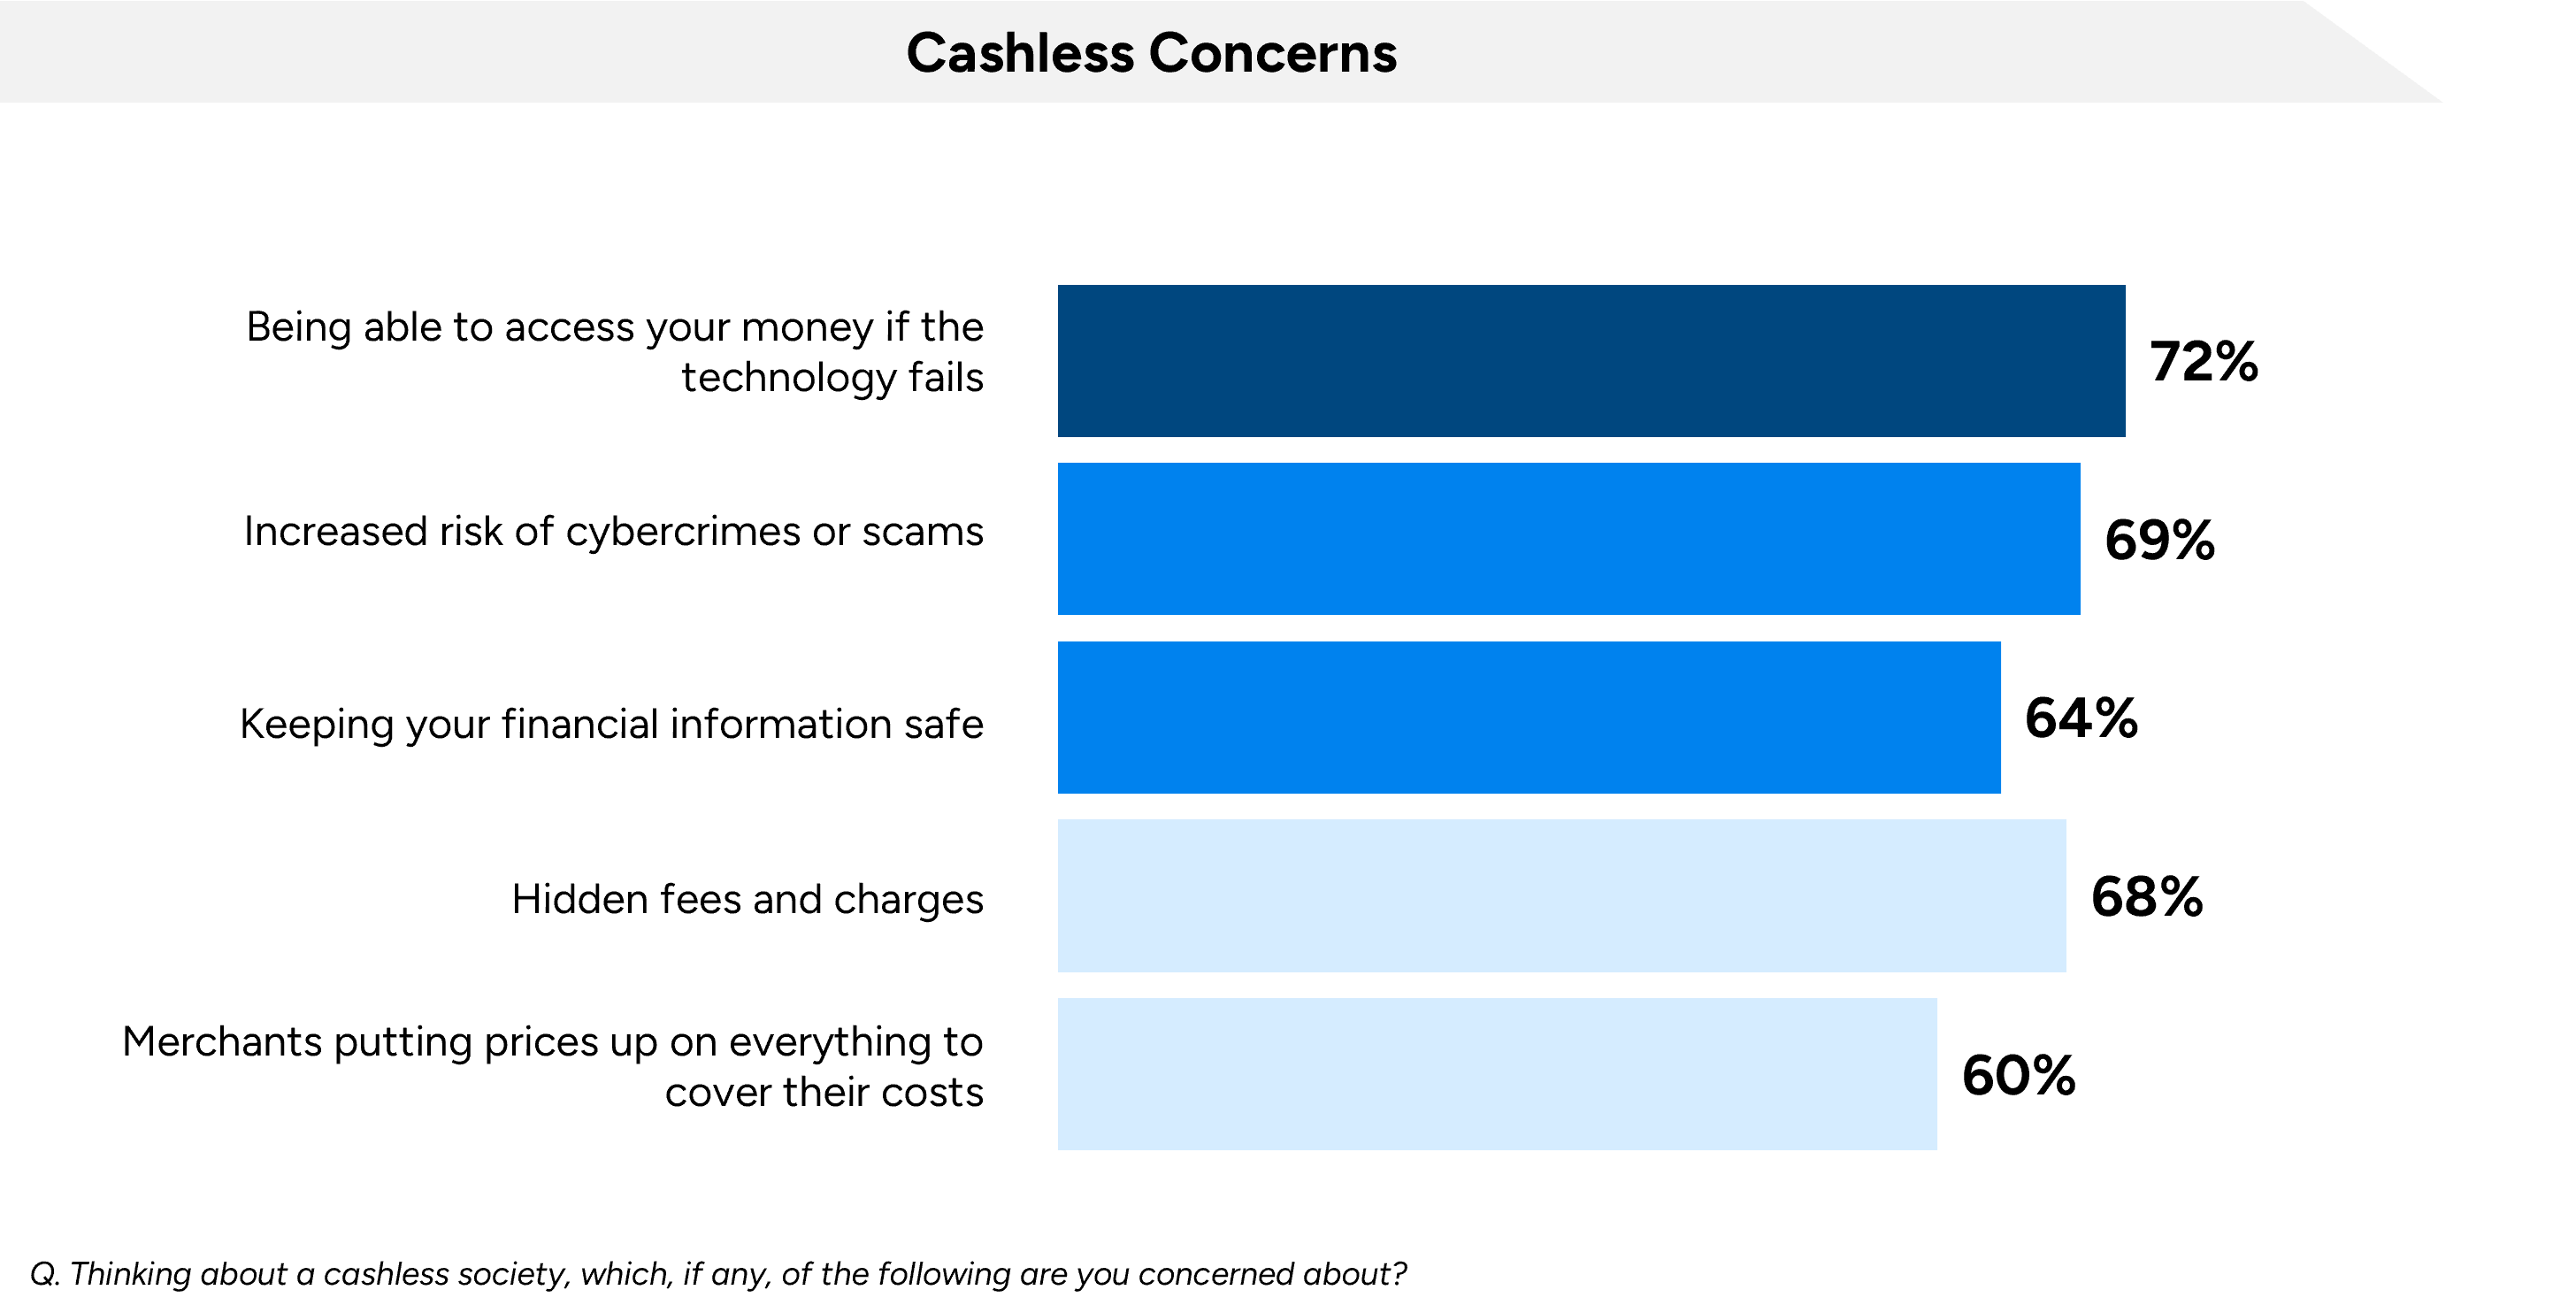 from bills to bytes: Australia's cashless conundrum - Cashless Concerns